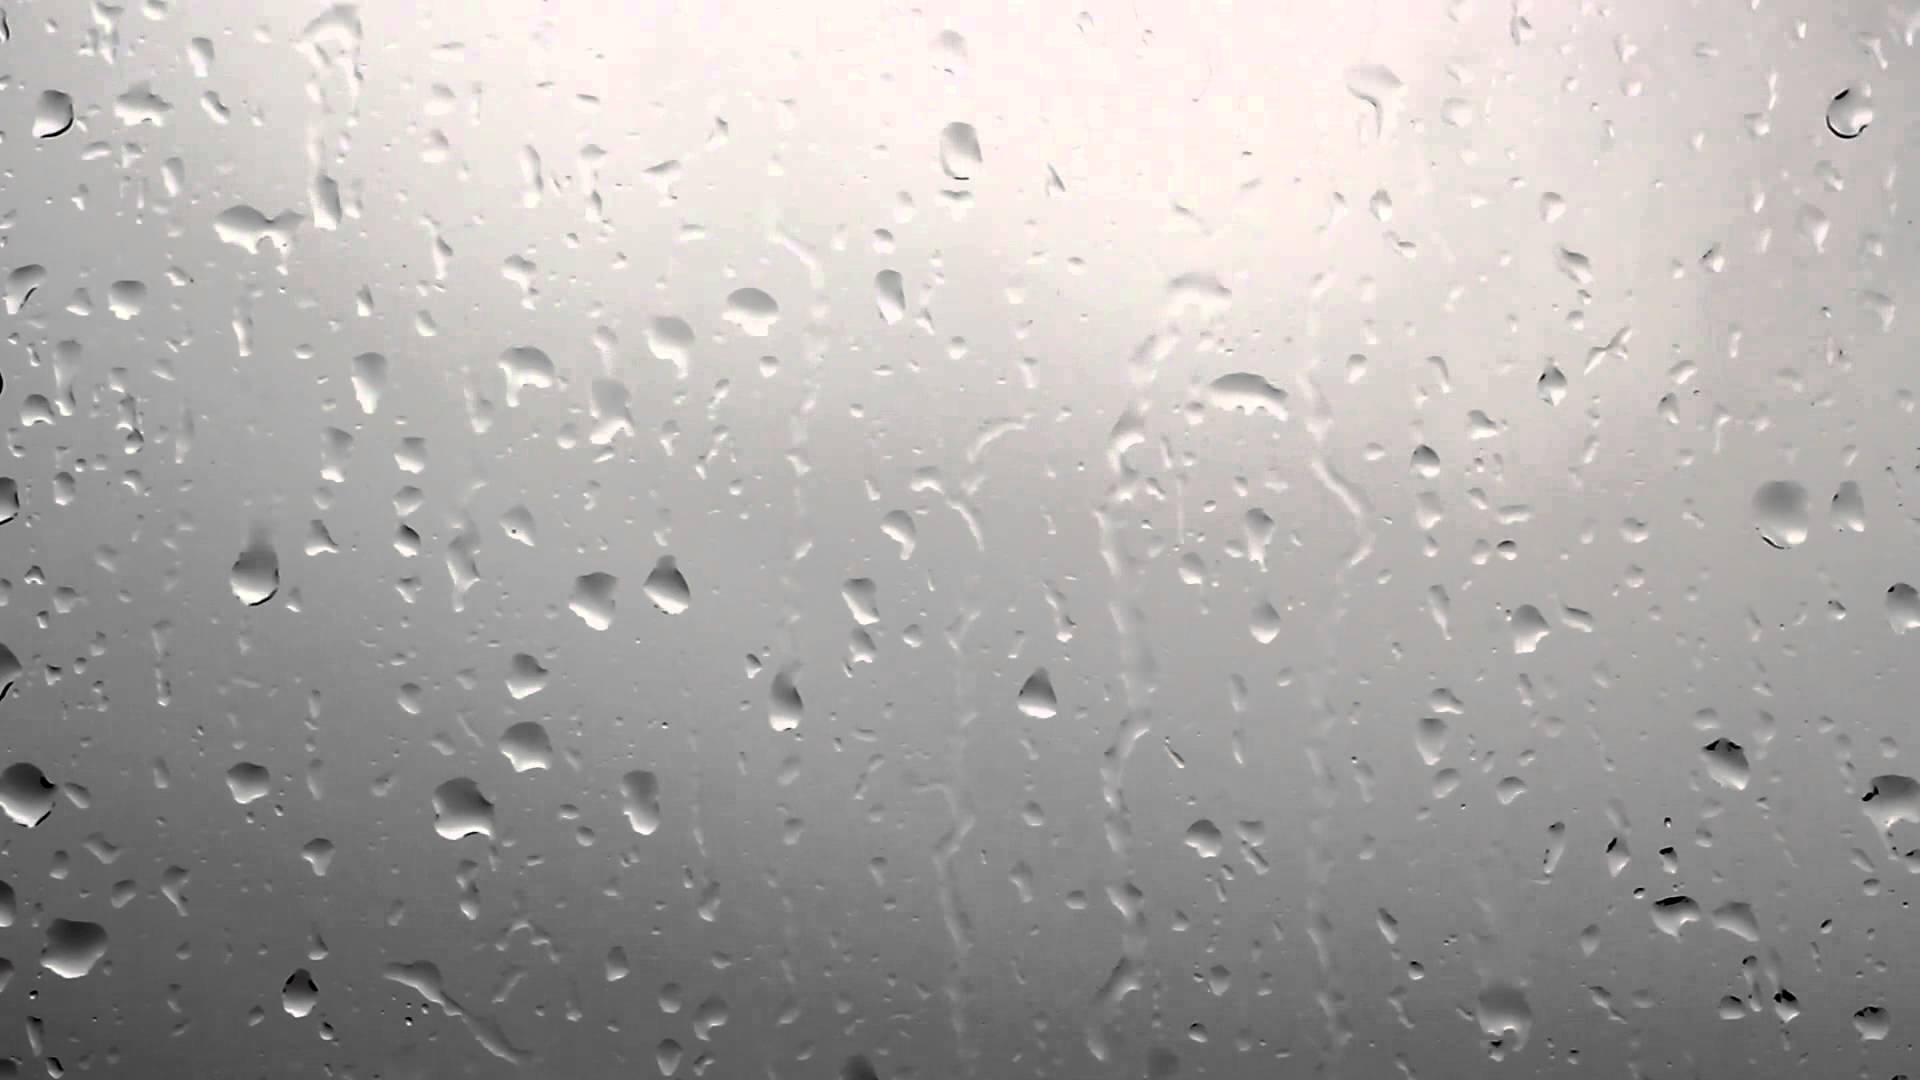 Rainy Window Raindrops on Window Dark Clouds Background